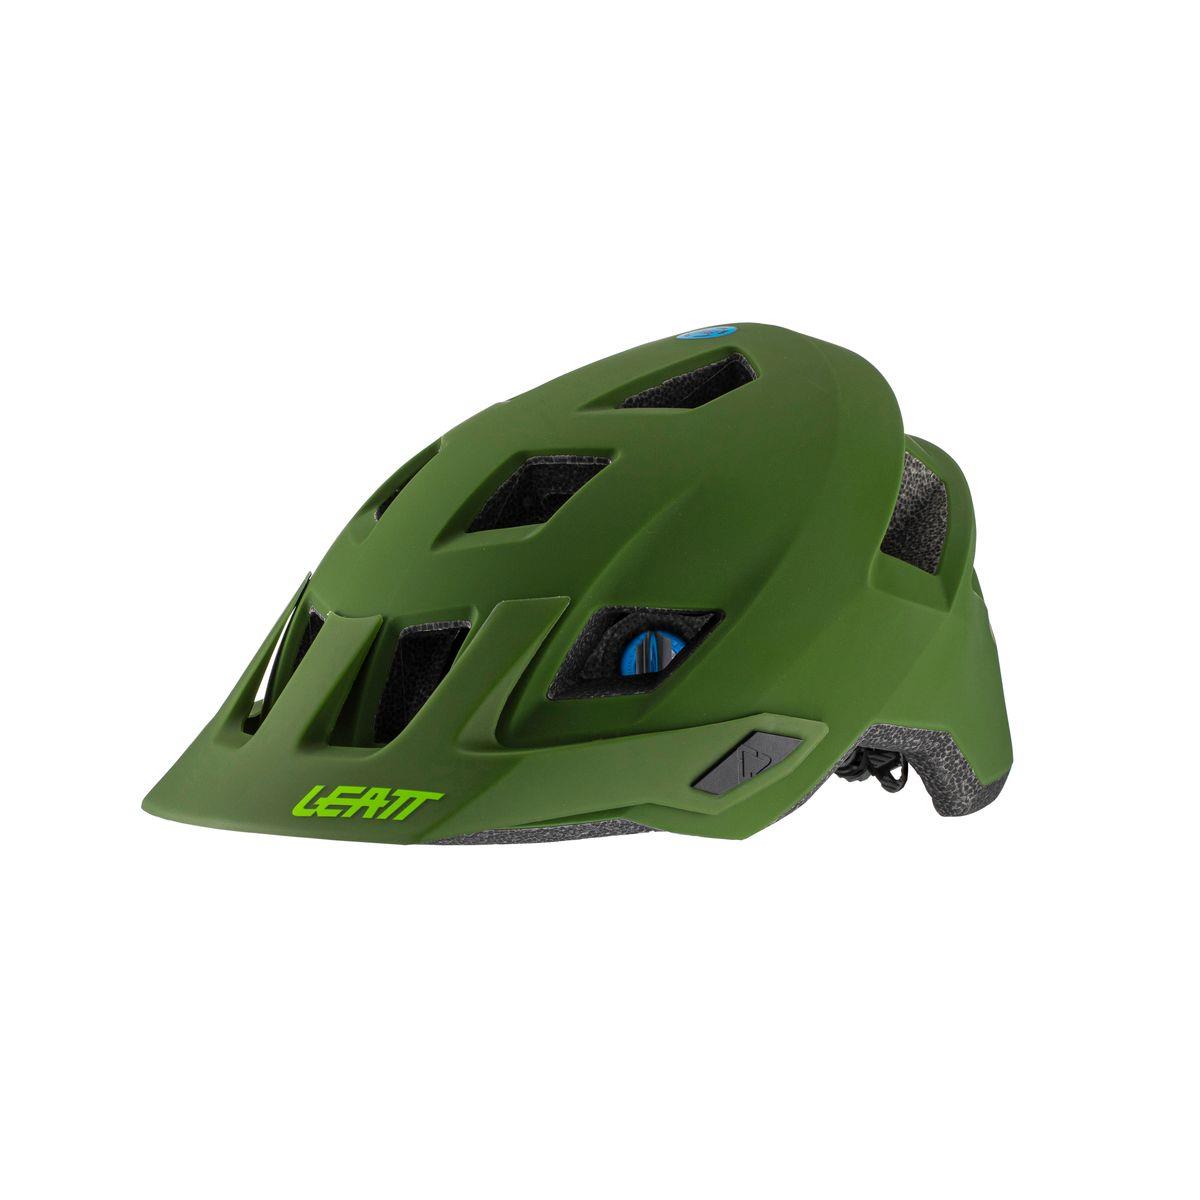 Helmet MTB 1.0 Turbine Technology Green Size S (51-55cm)